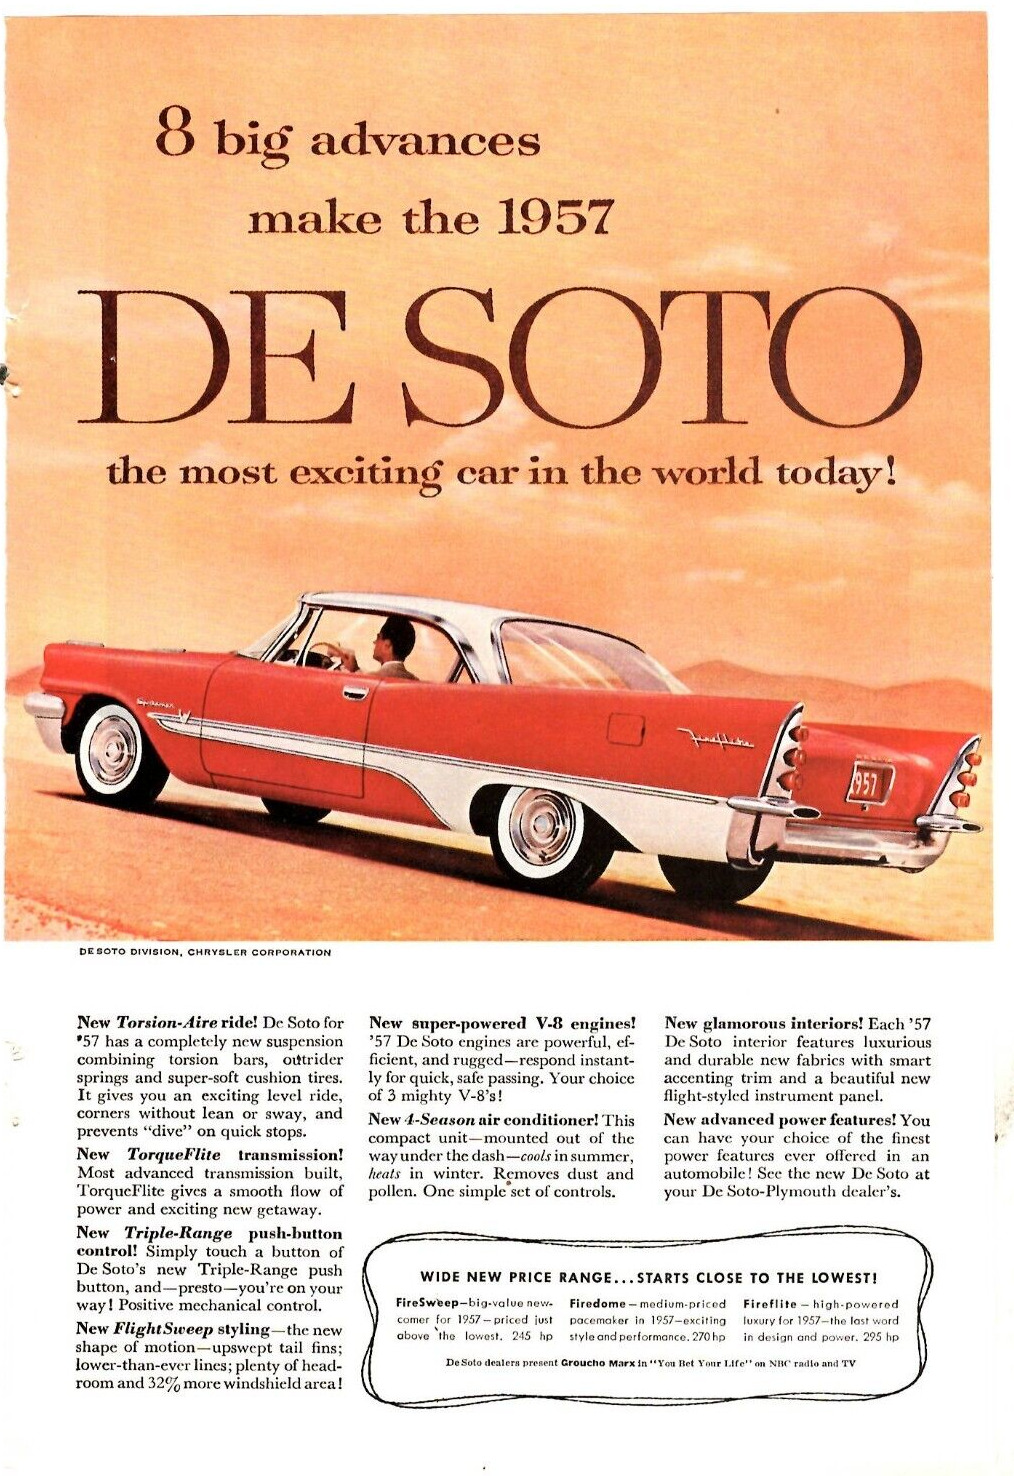 1957 Print Ad De Soto Fireflite 2-door Sportsman in Fiesta Red and White Advance